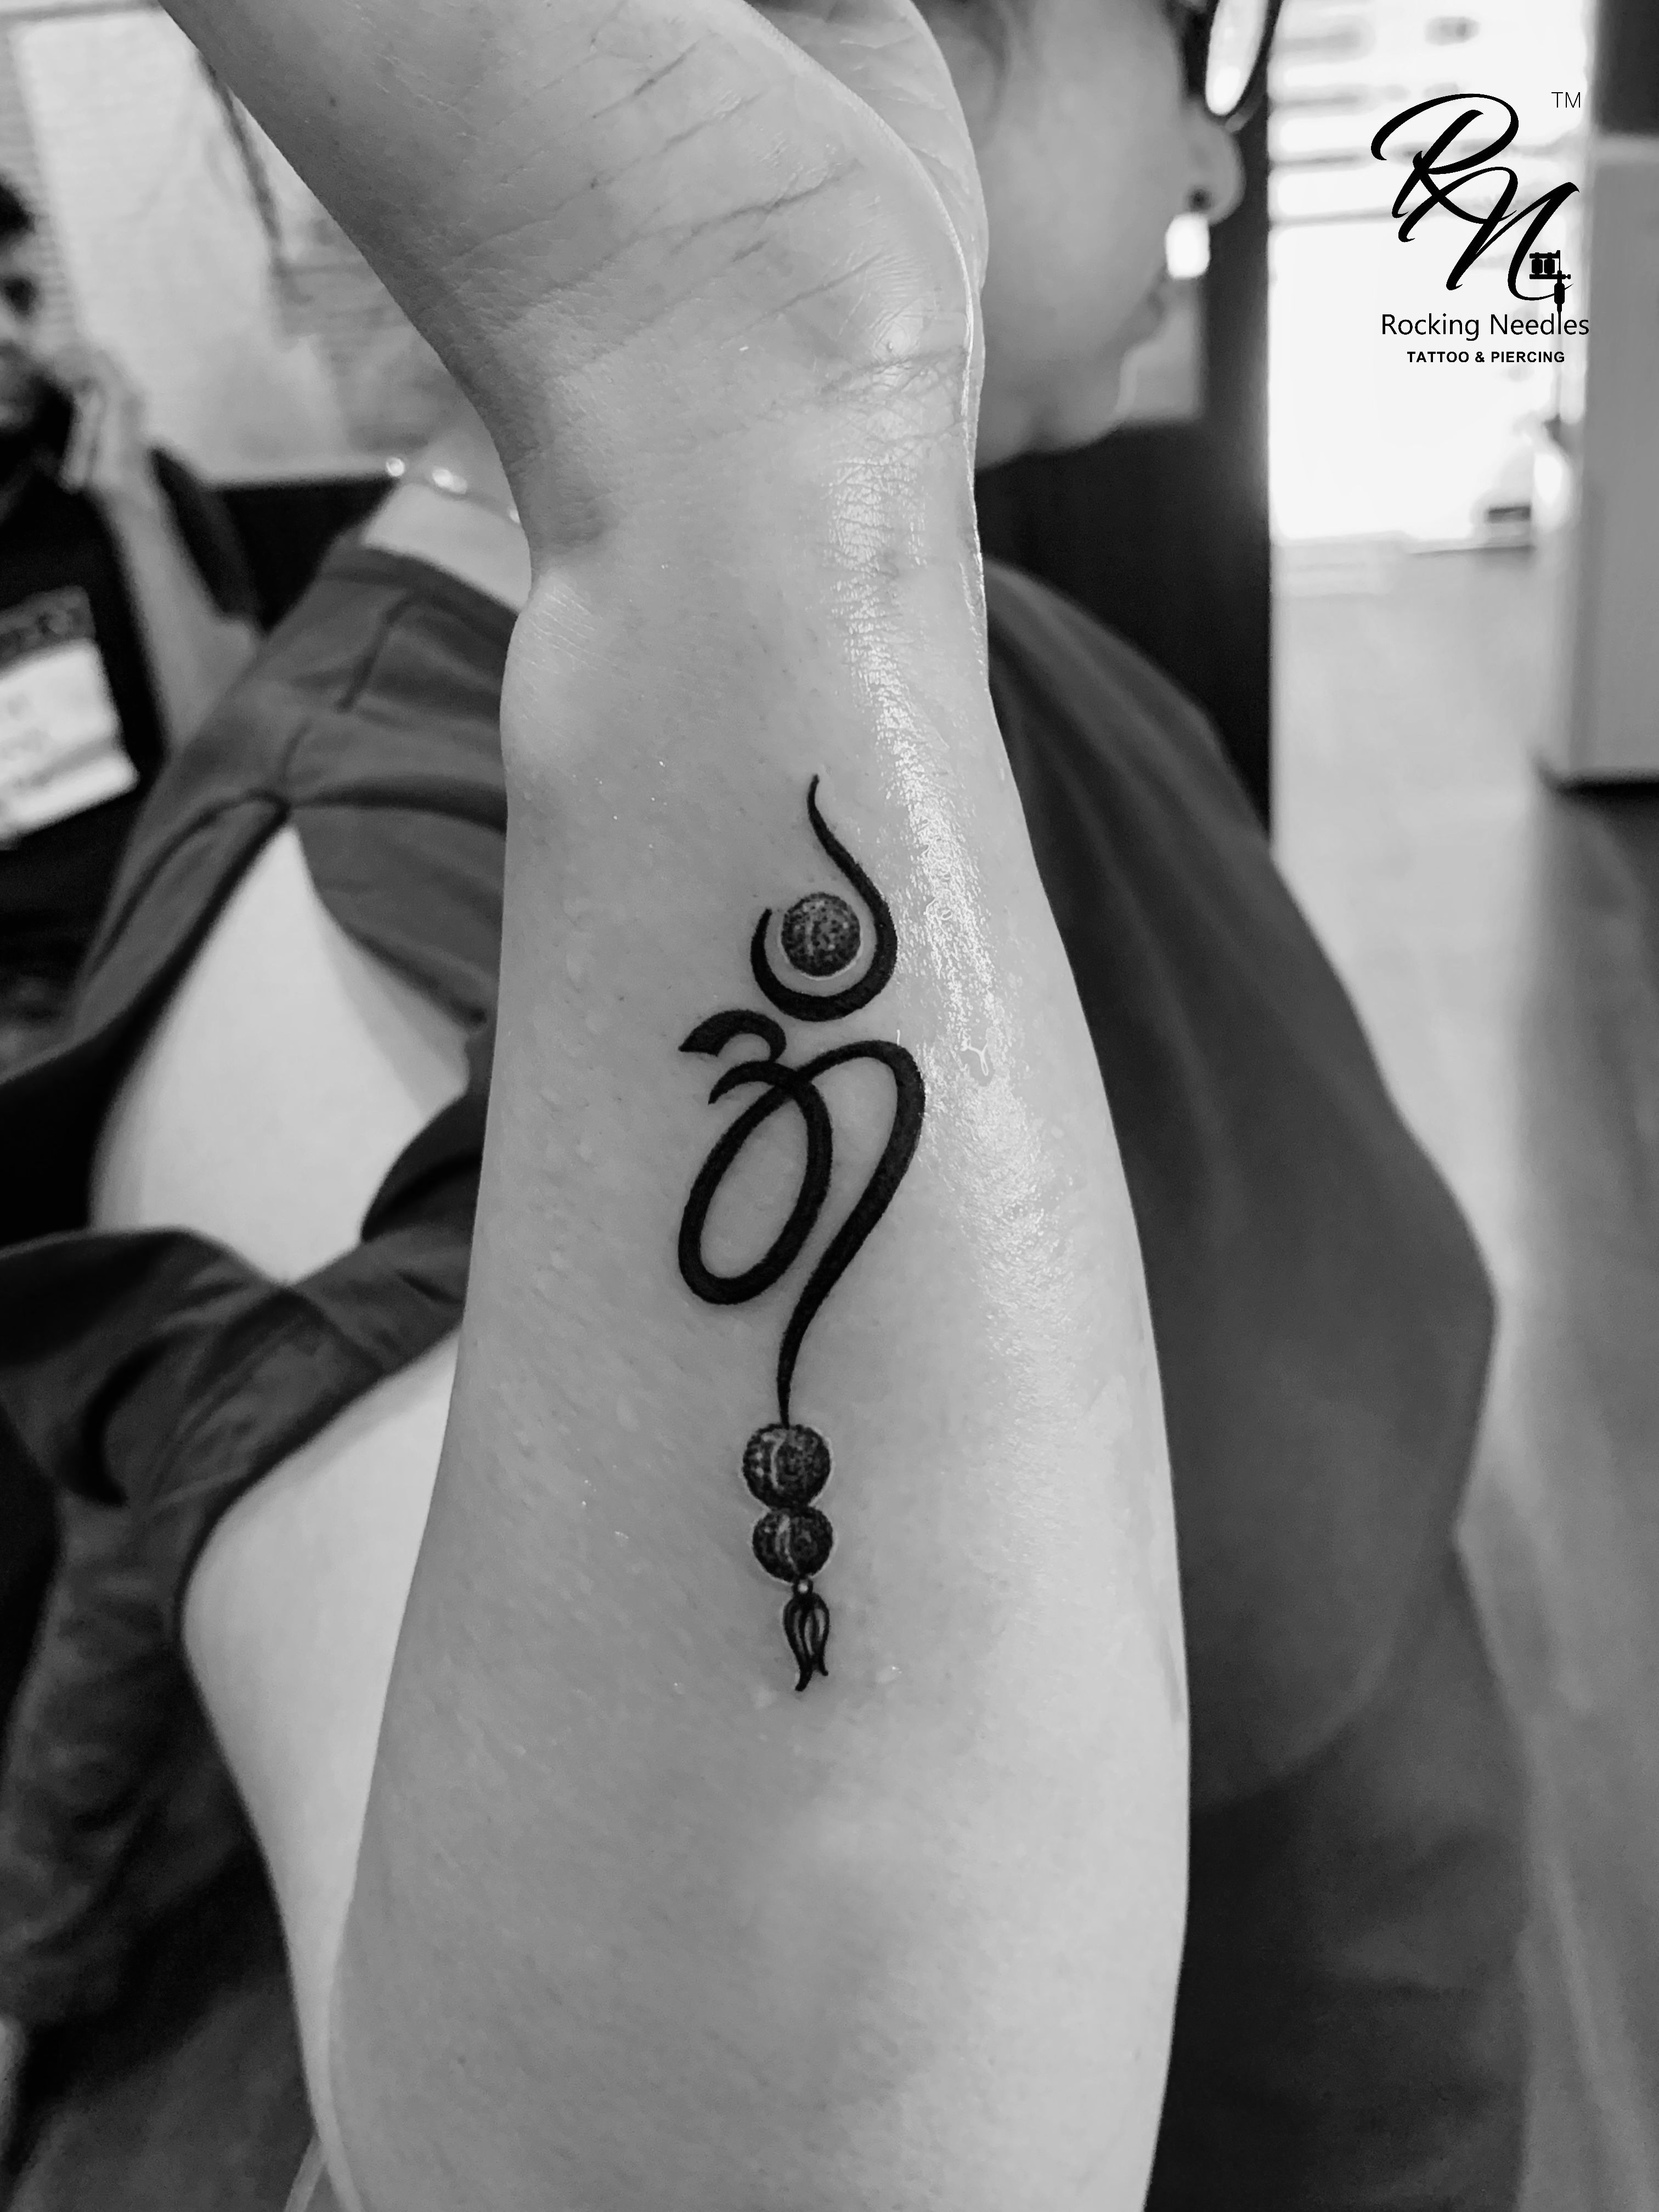 Can Hindus get tattooed? - Quora